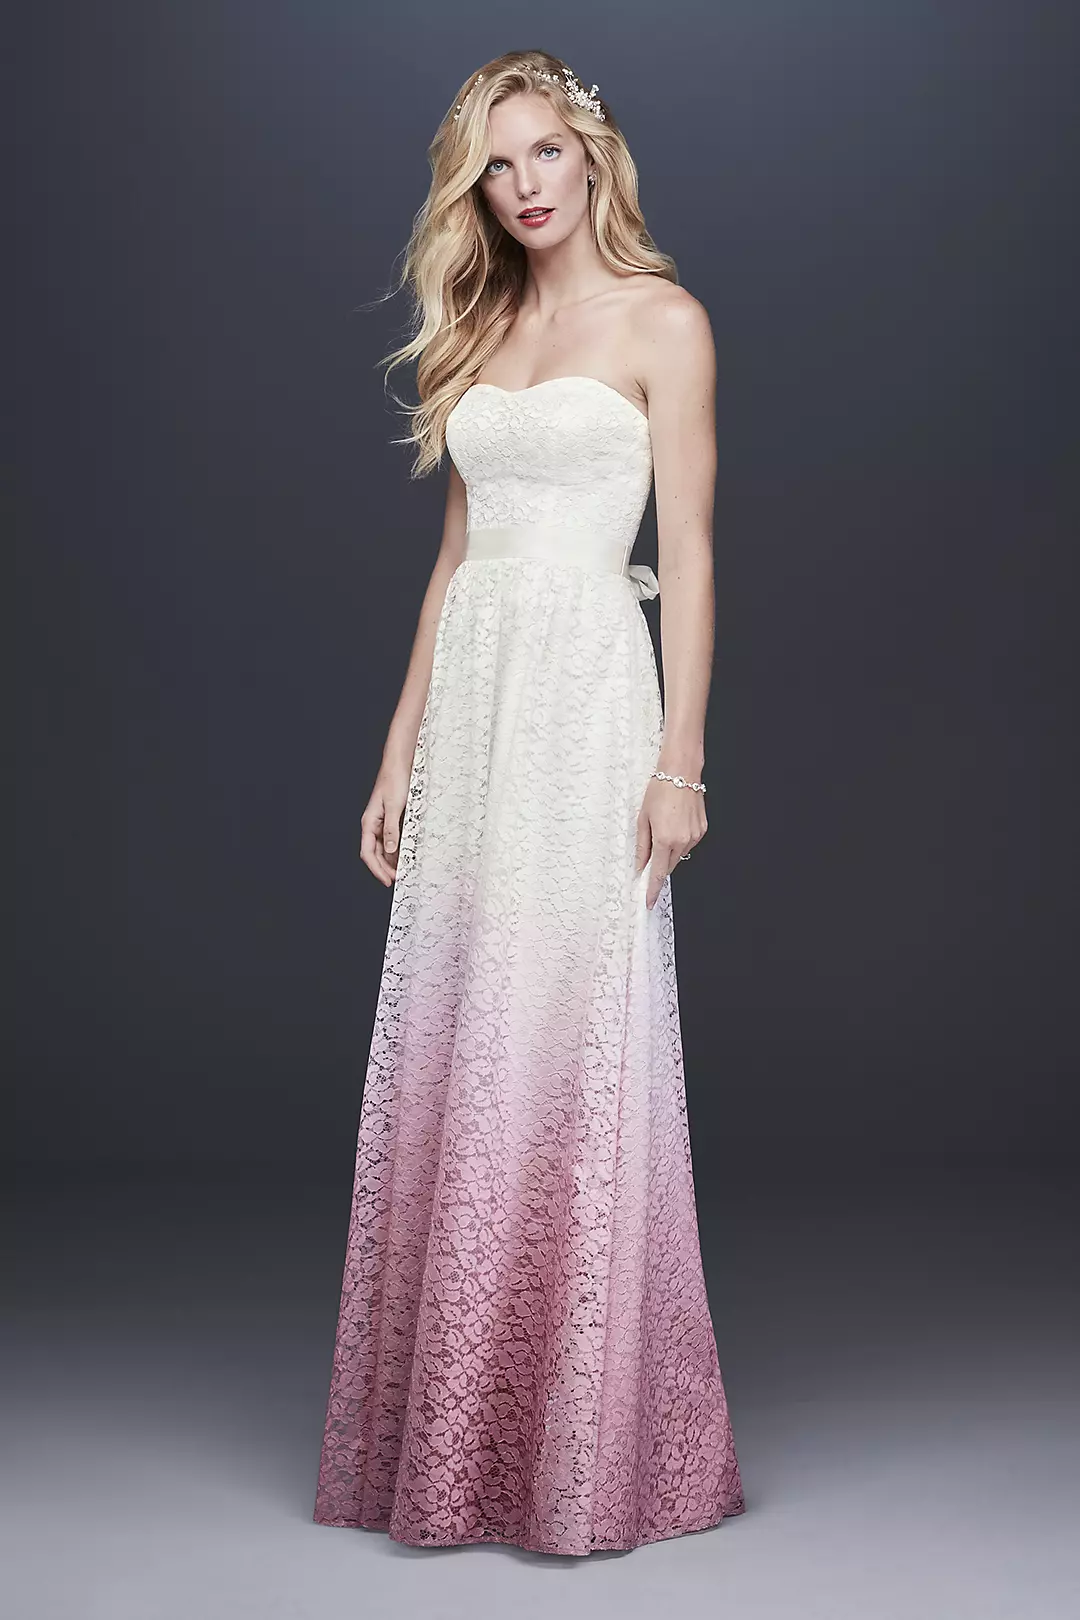 Ombre Lace A-line Wedding Dress Image